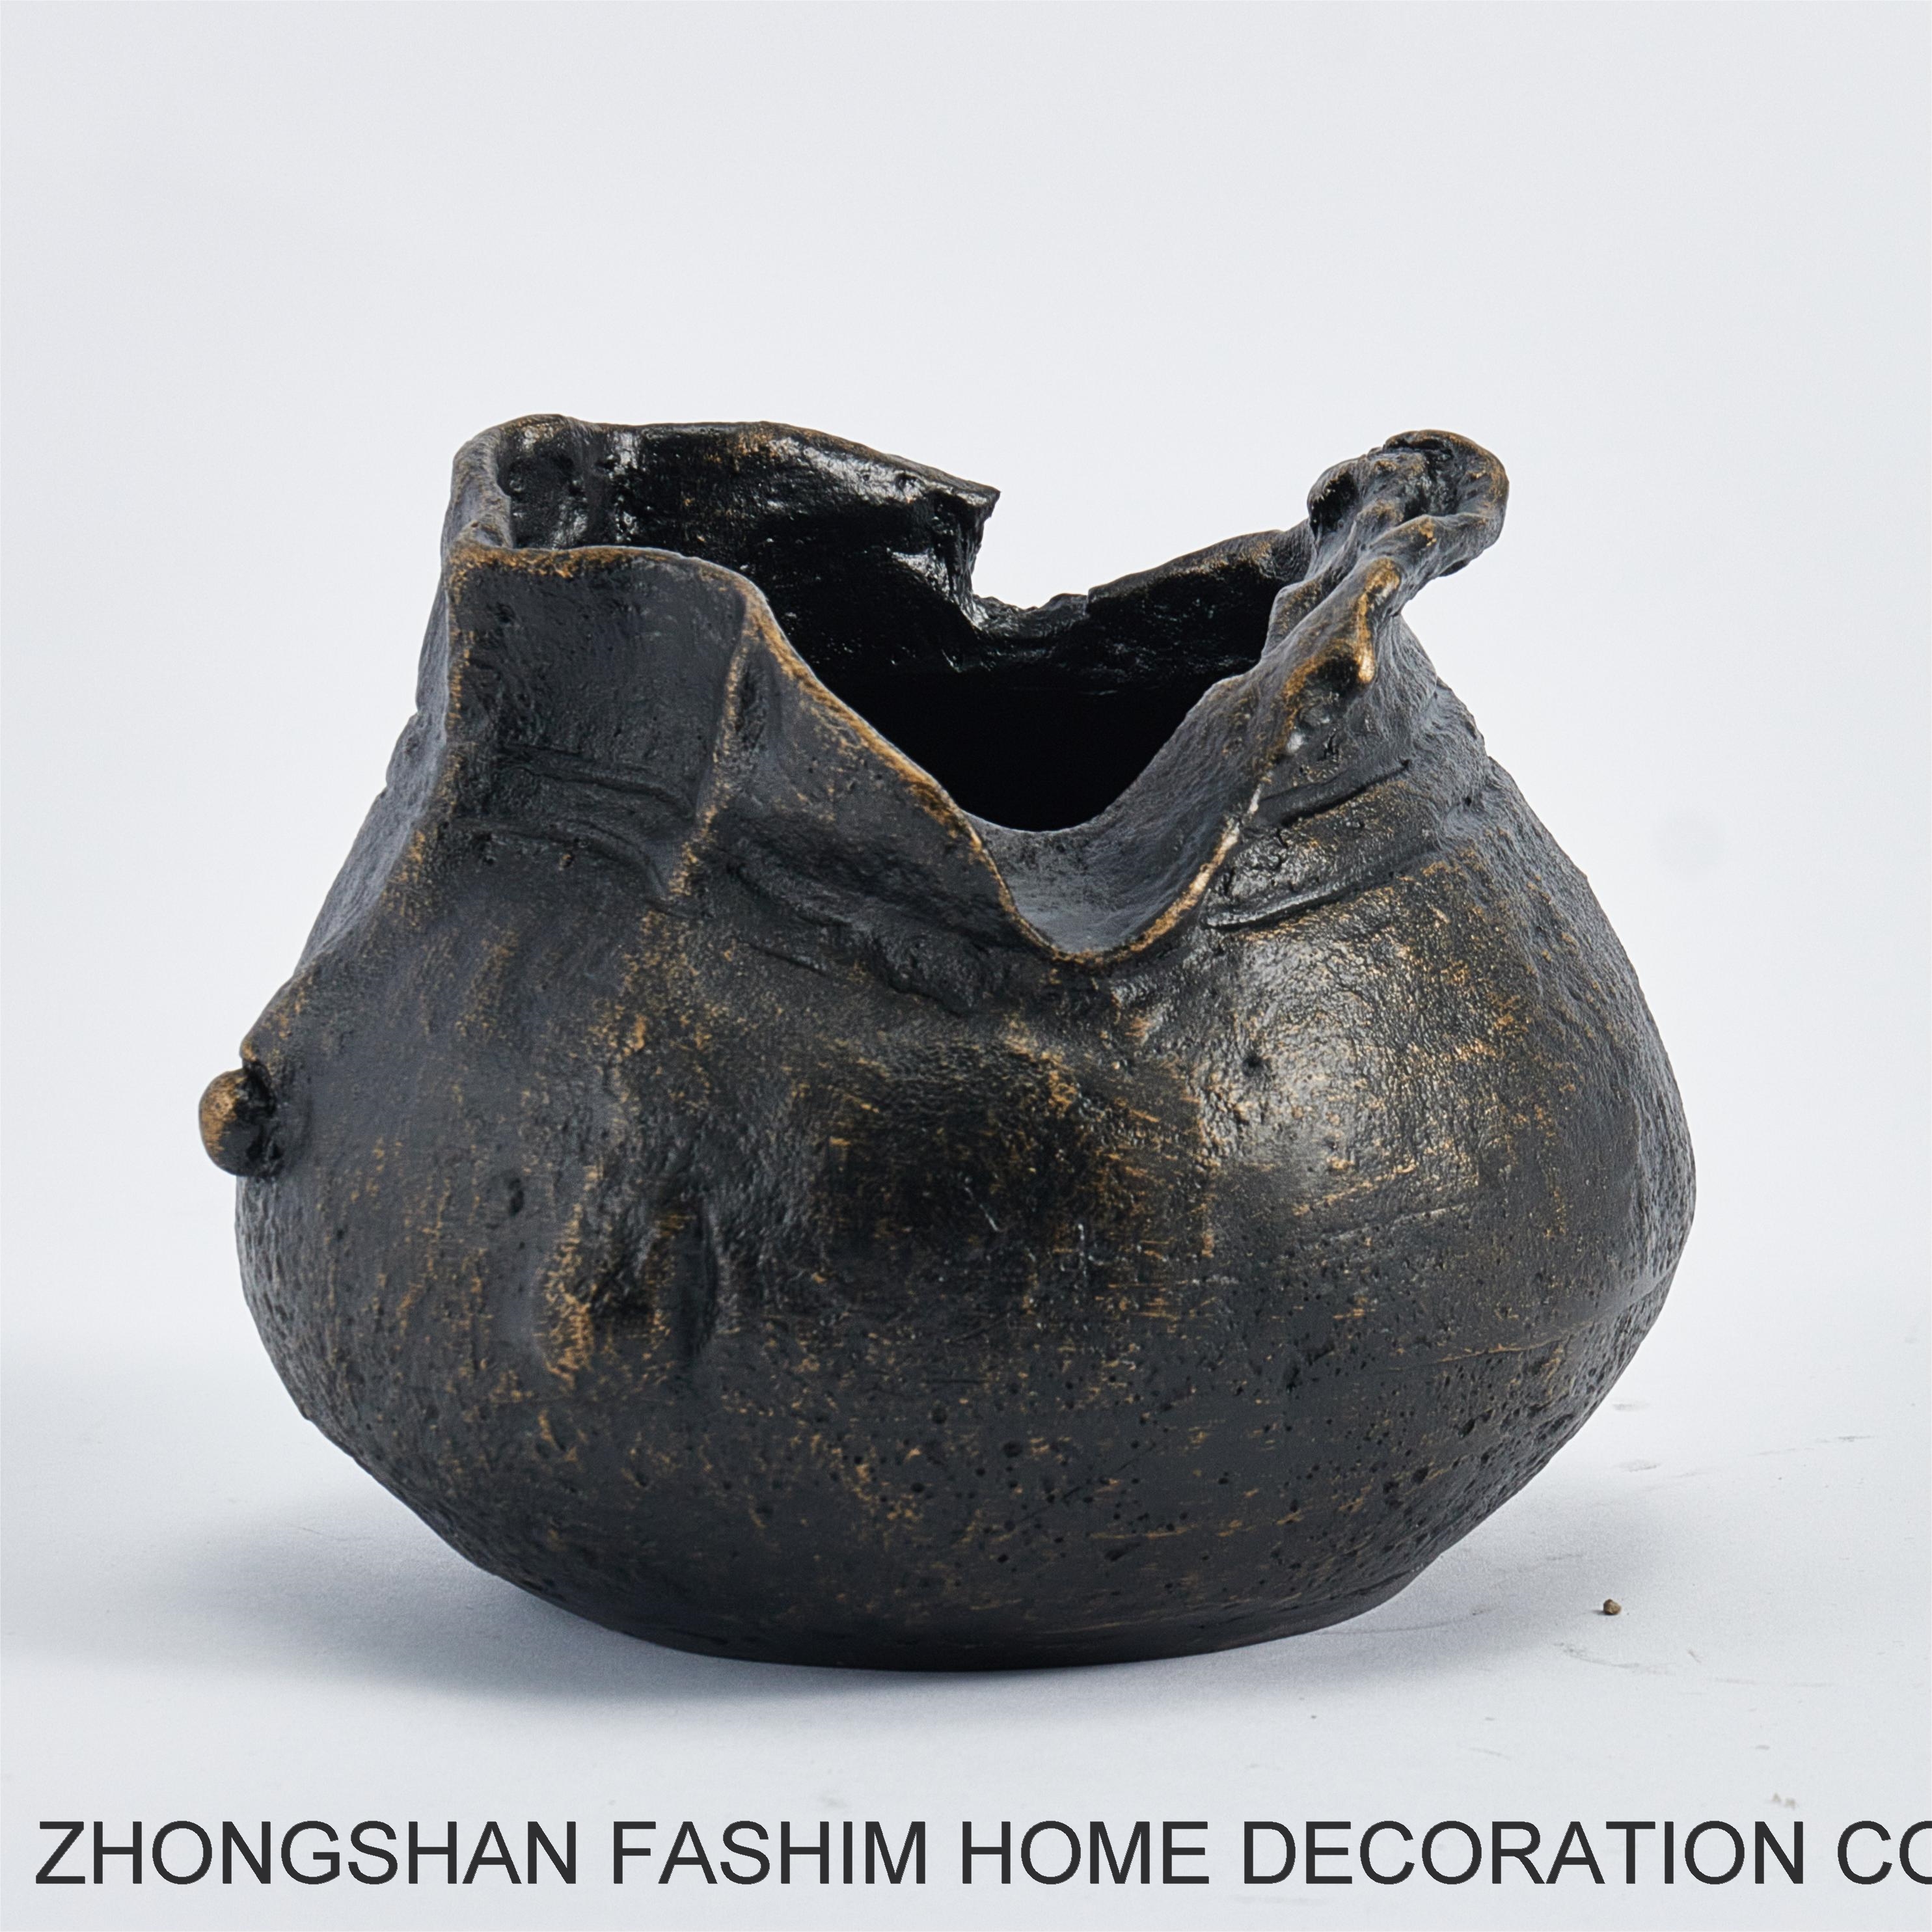 Fashimdecor home decoration ornamental bowl